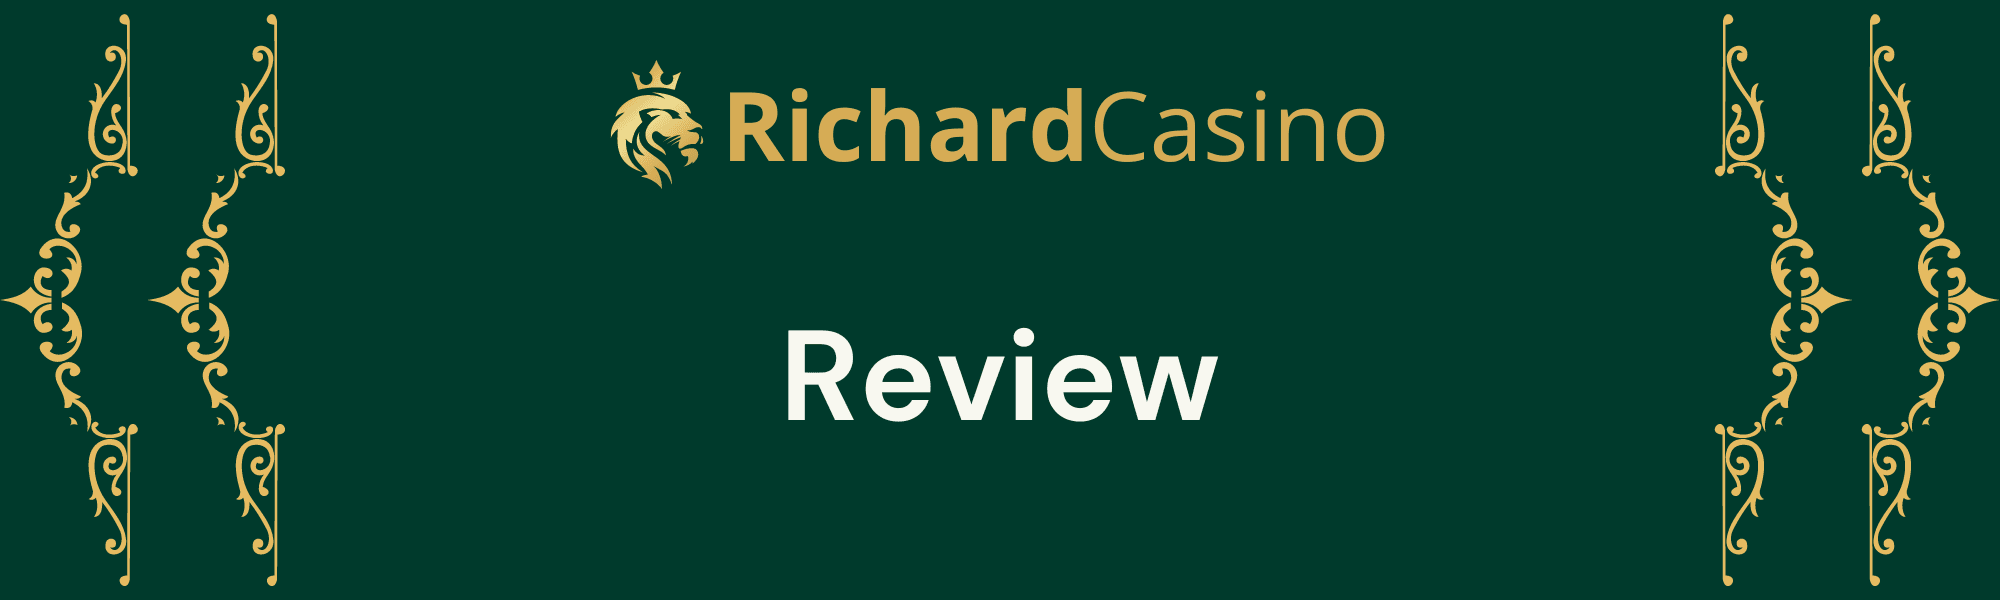 Richard Casino Review.png